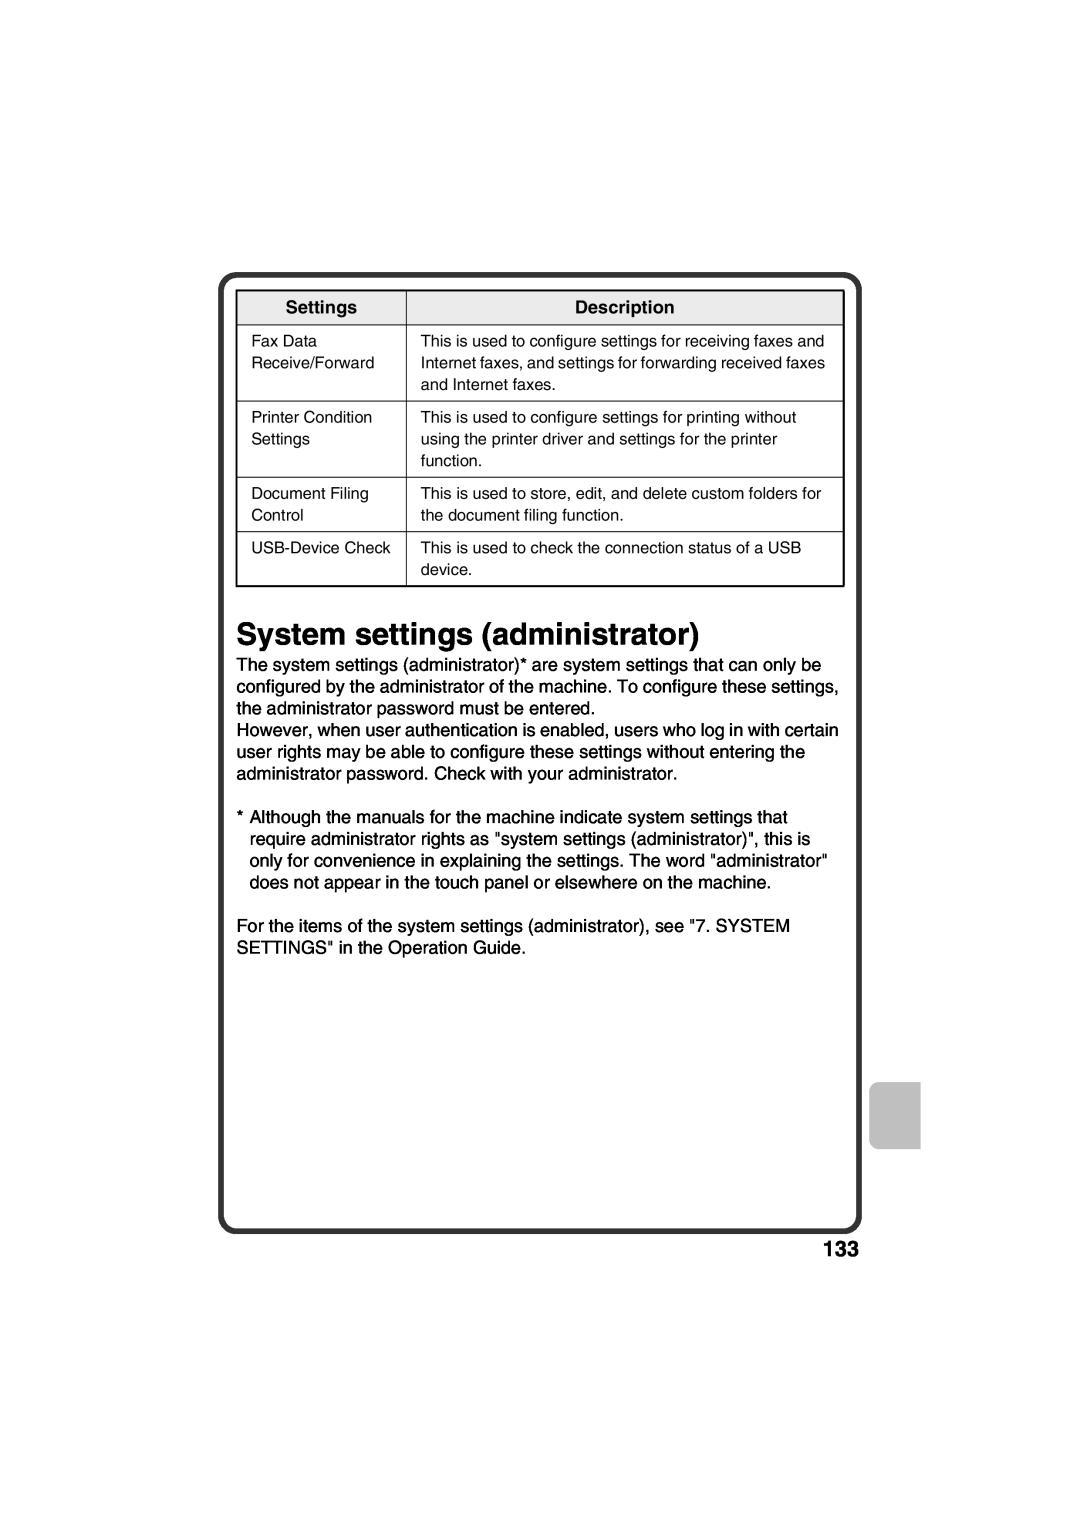 Sharp MX-C381, MX-C311 quick start System settings administrator, Settings, Description 